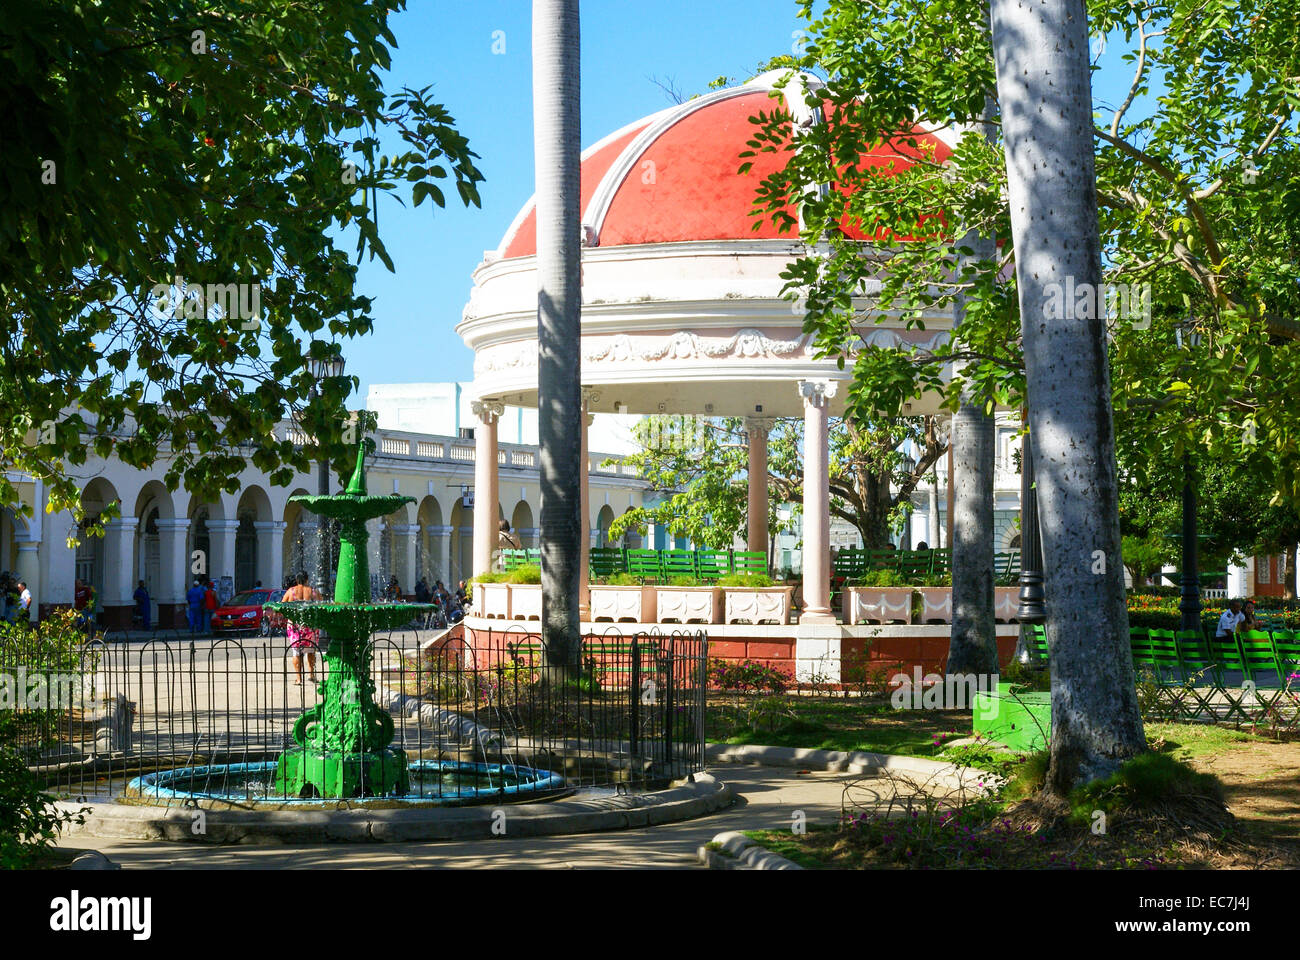 Marti Park and City Hall, Cienfuegos, Cuba Stock Photo